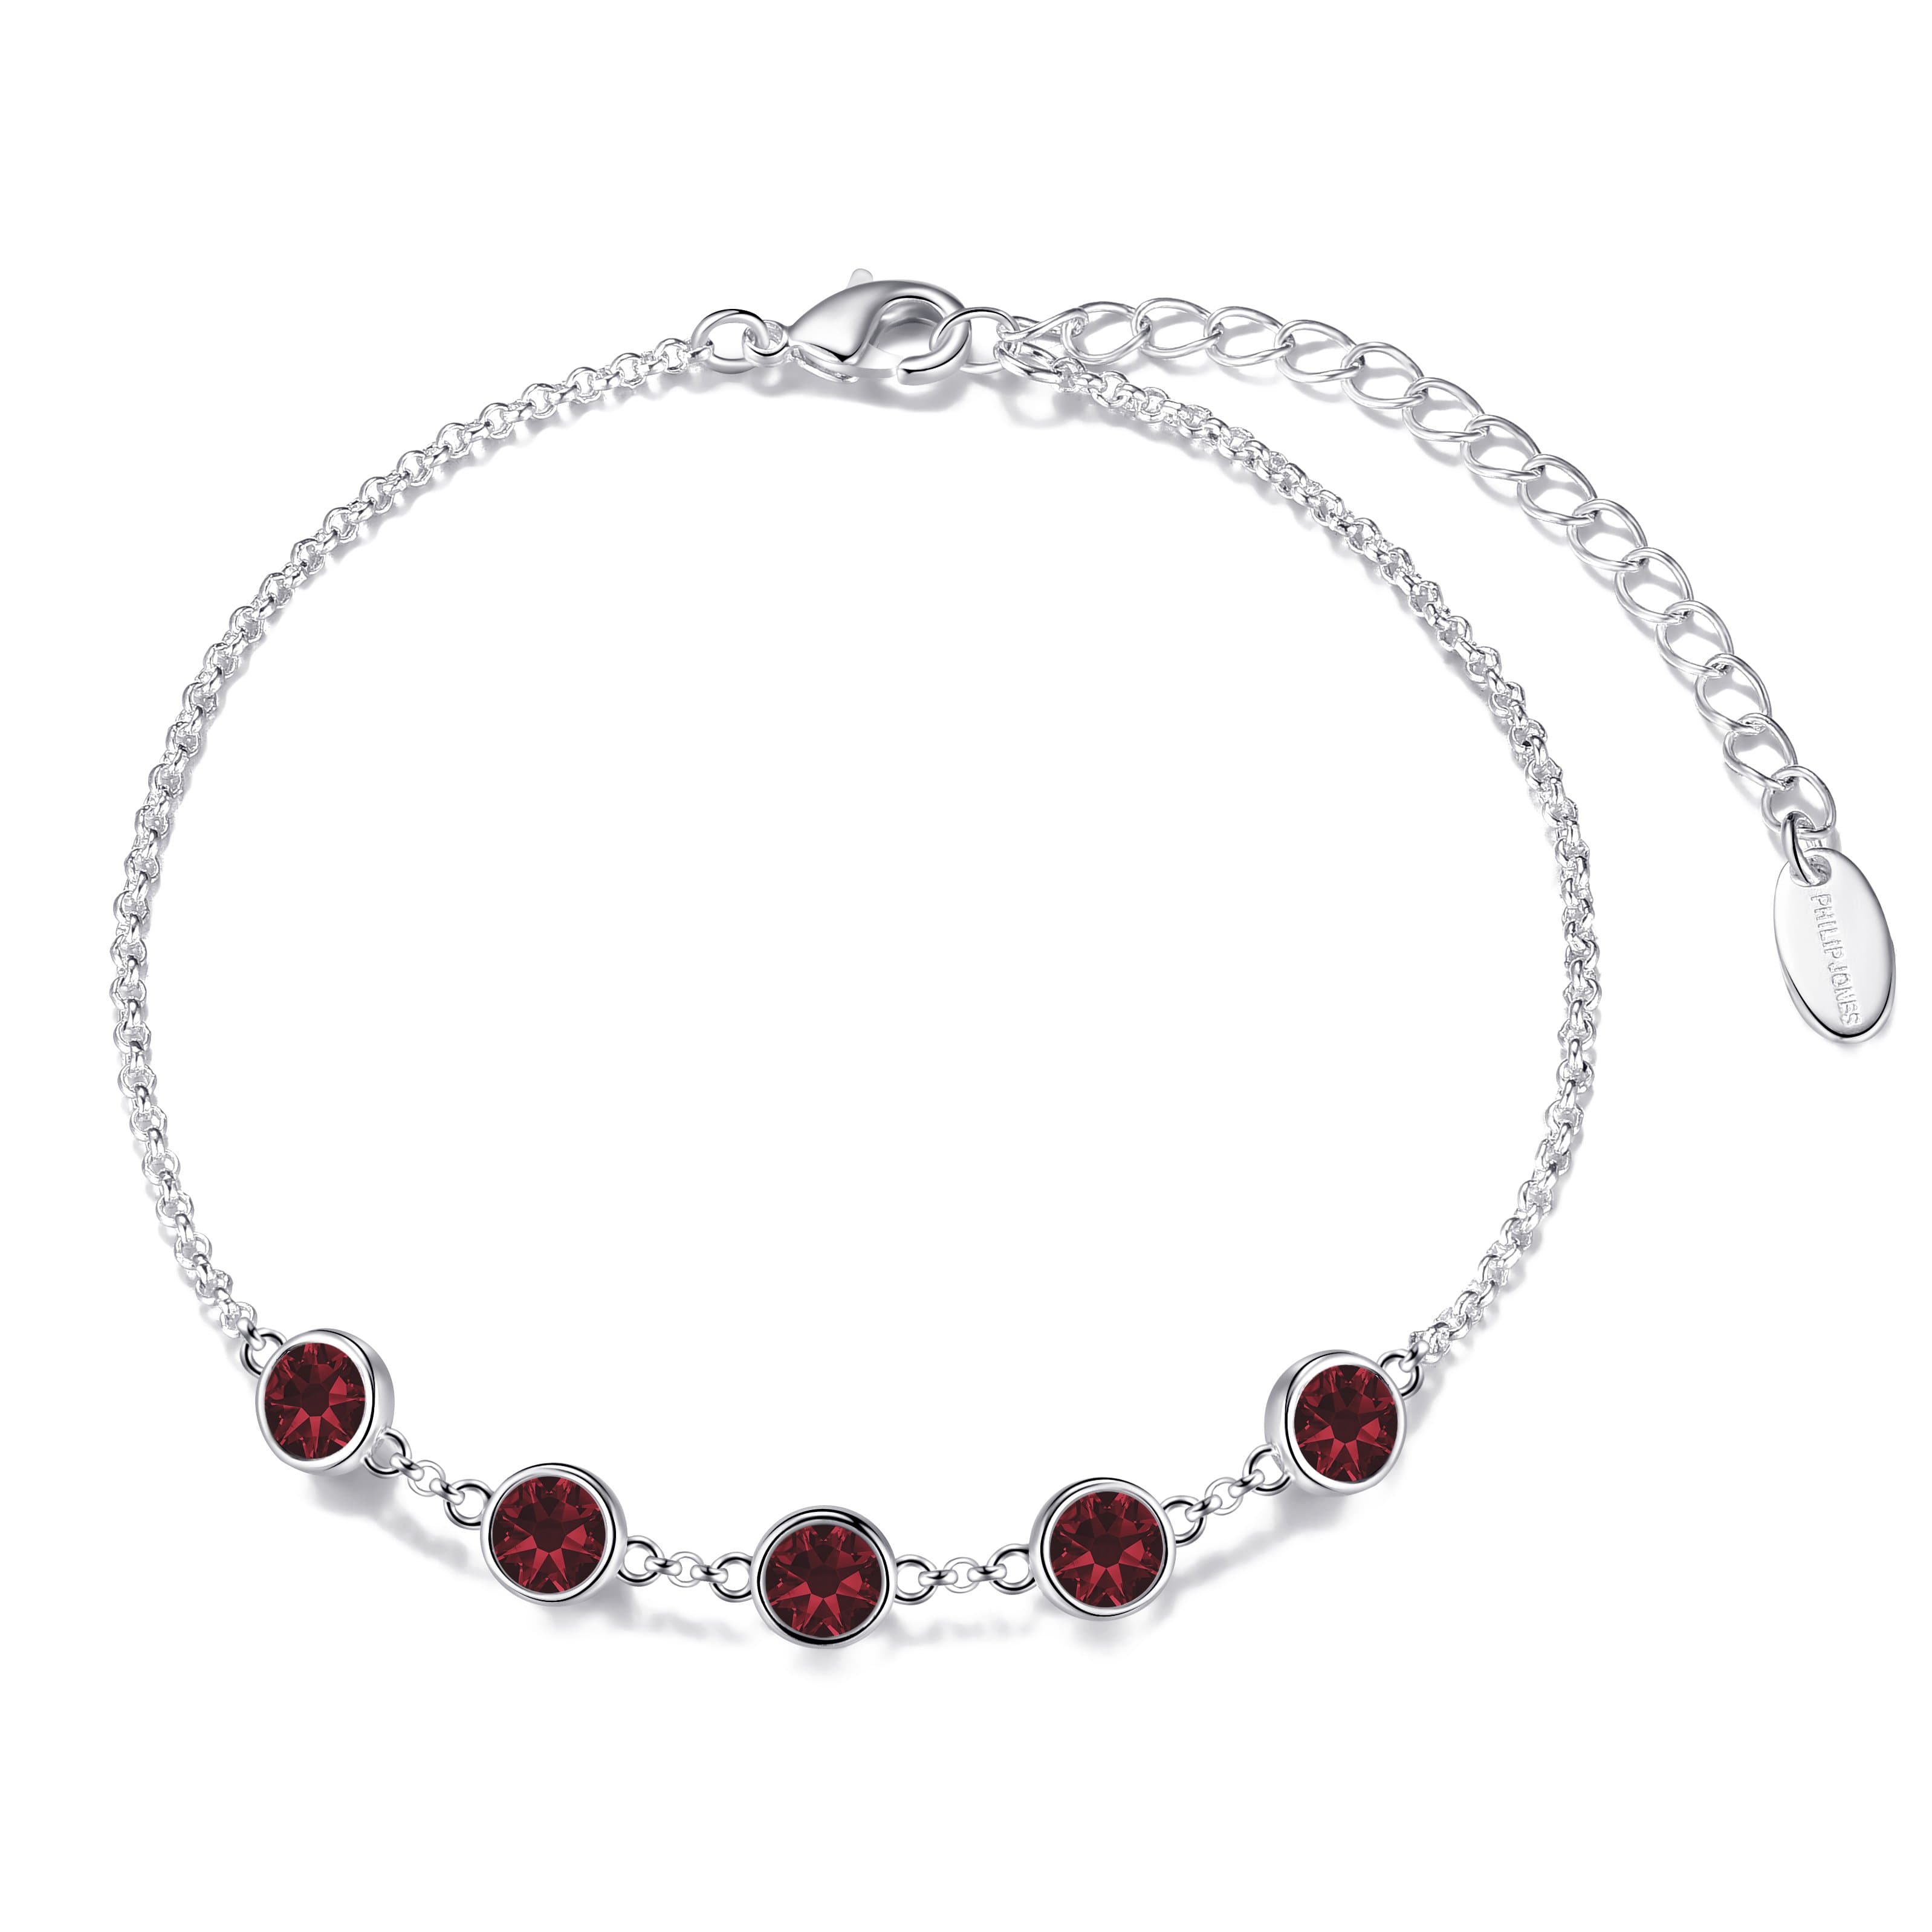 Dark Red Crystal Chain Bracelet Created with Zircondia® Crystals by Philip Jones Jewellery